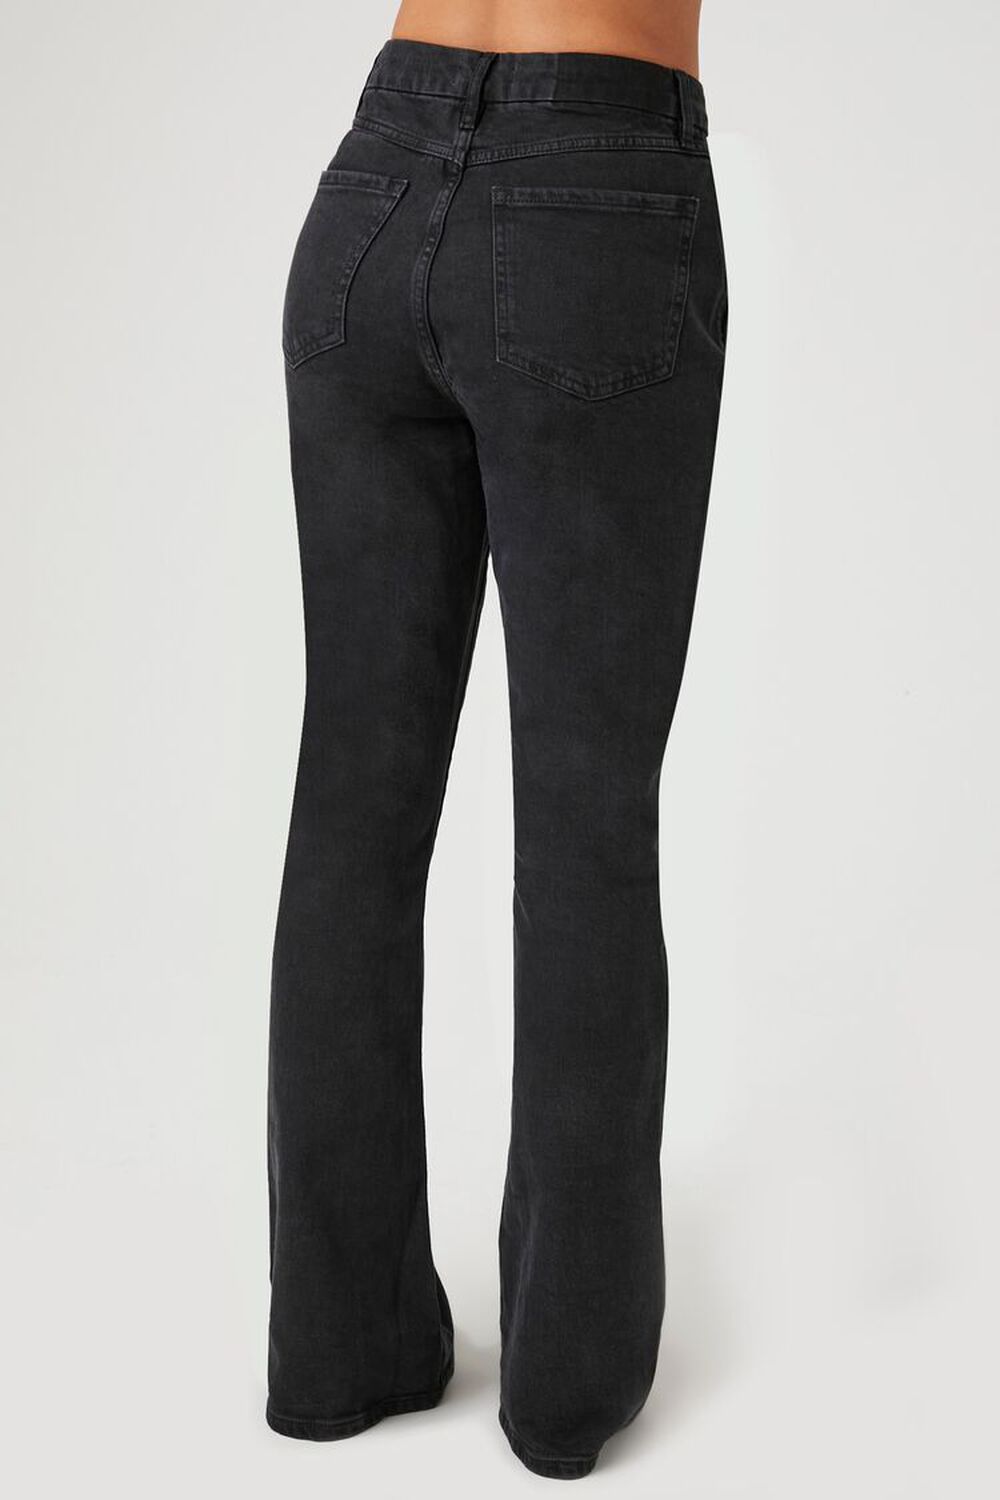 BLACK Curvy Mid-Rise Flare Jeans, image 3